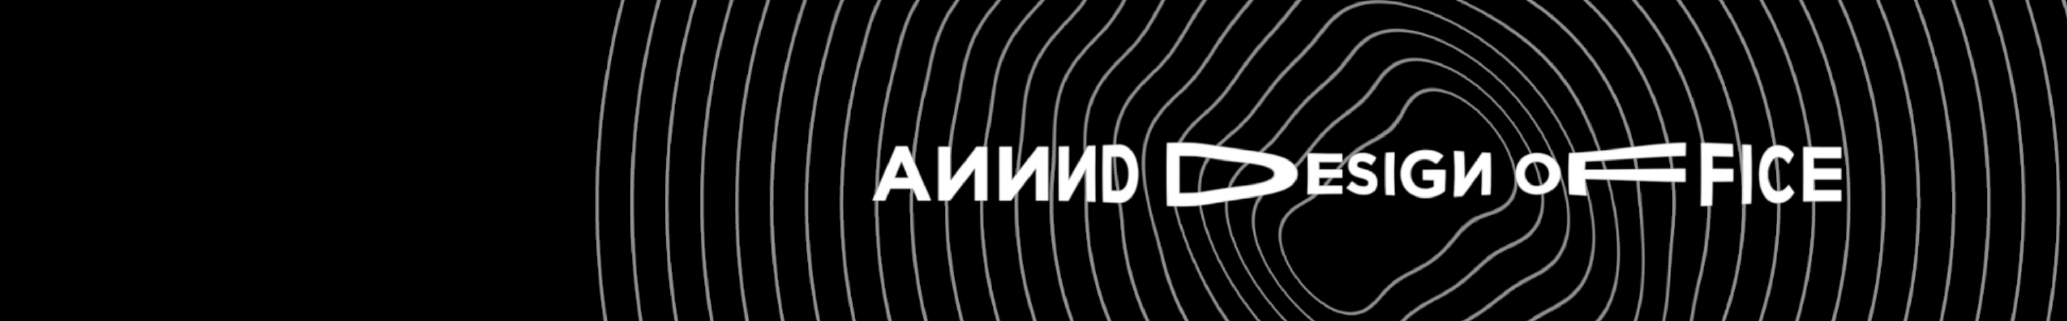 ANNND Design Office's profile banner